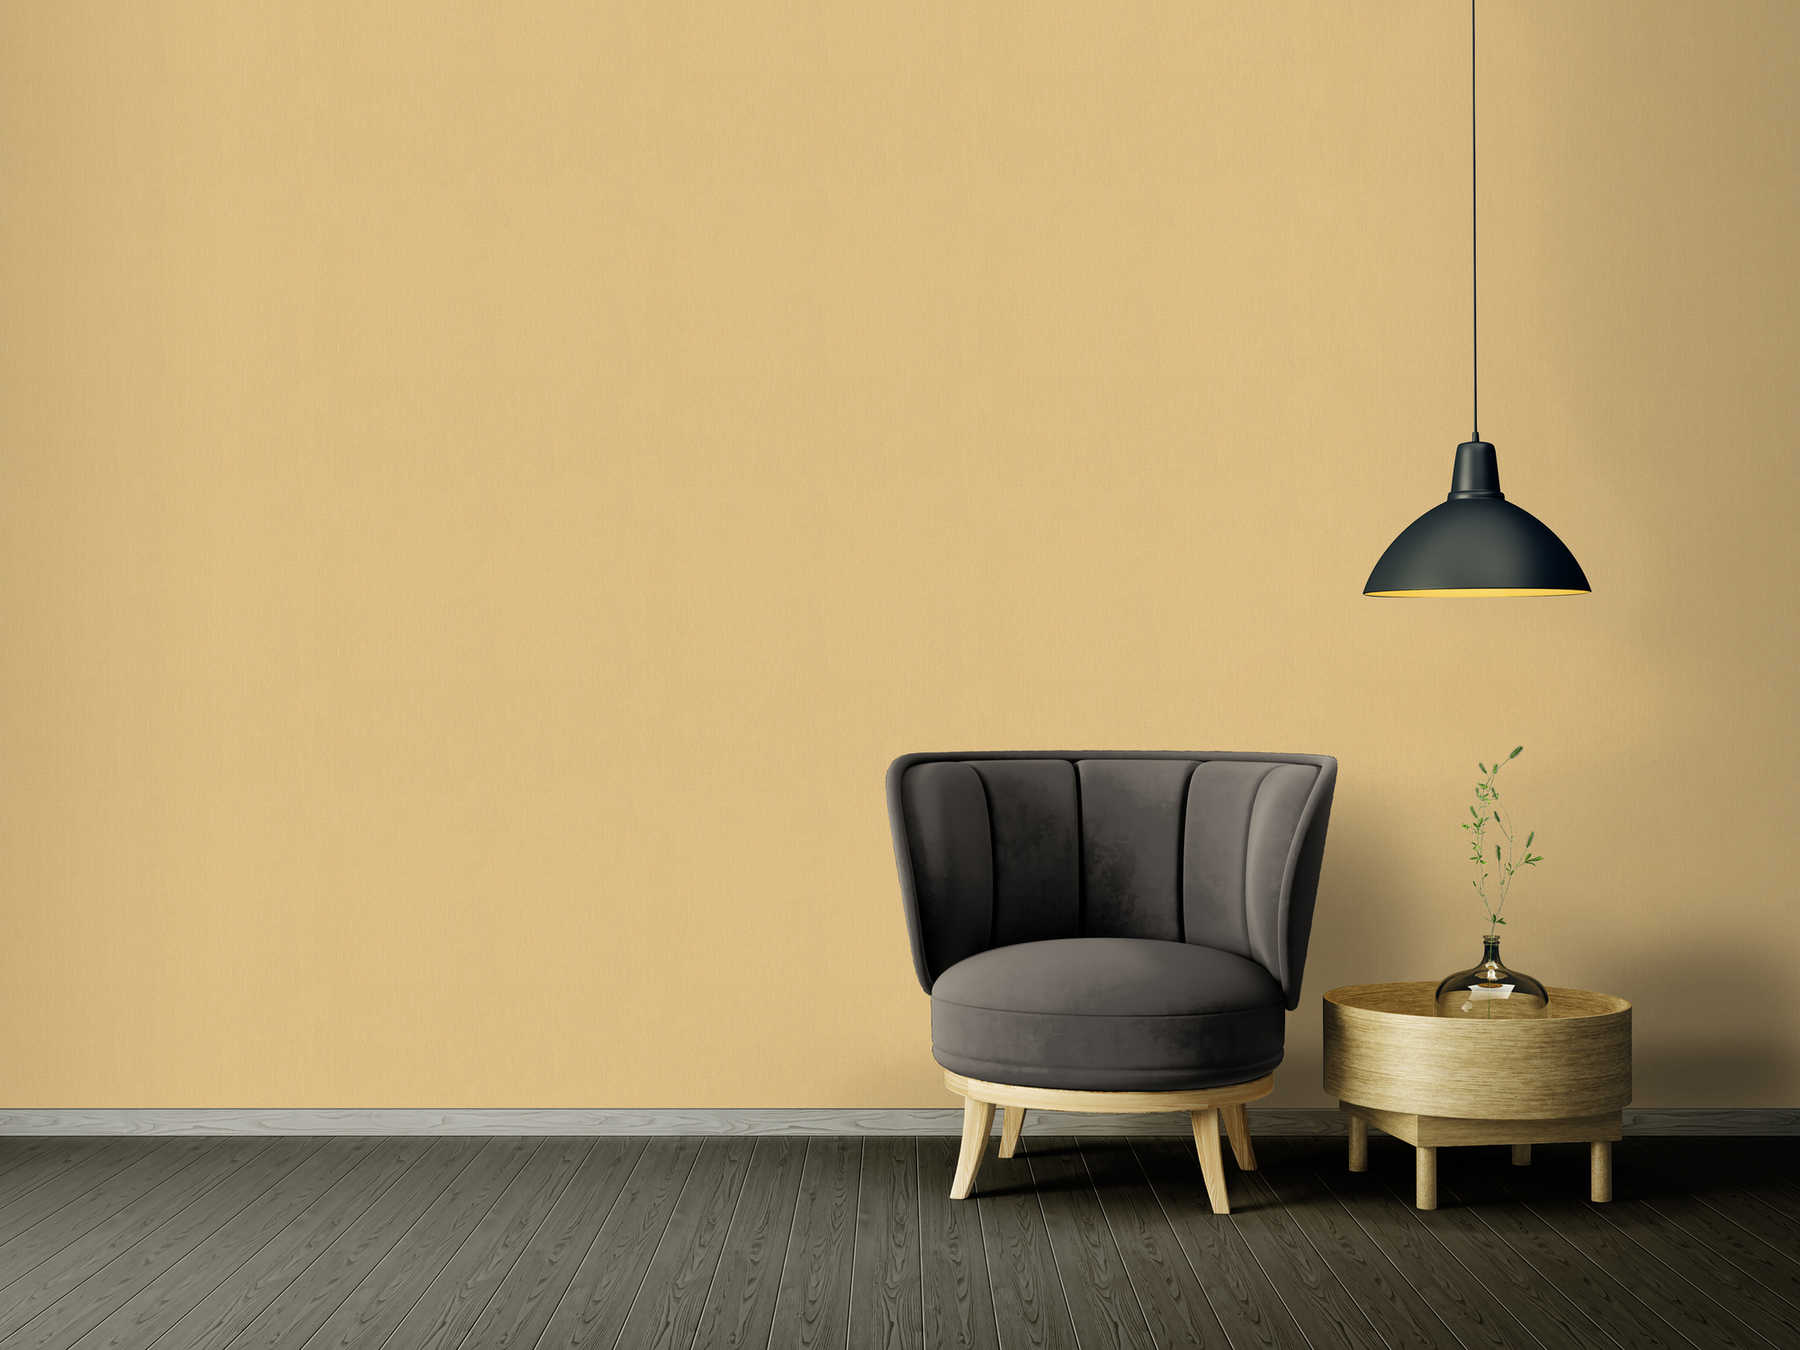             Golden plain wallpaper with fine glitter threads - gold, cream
        